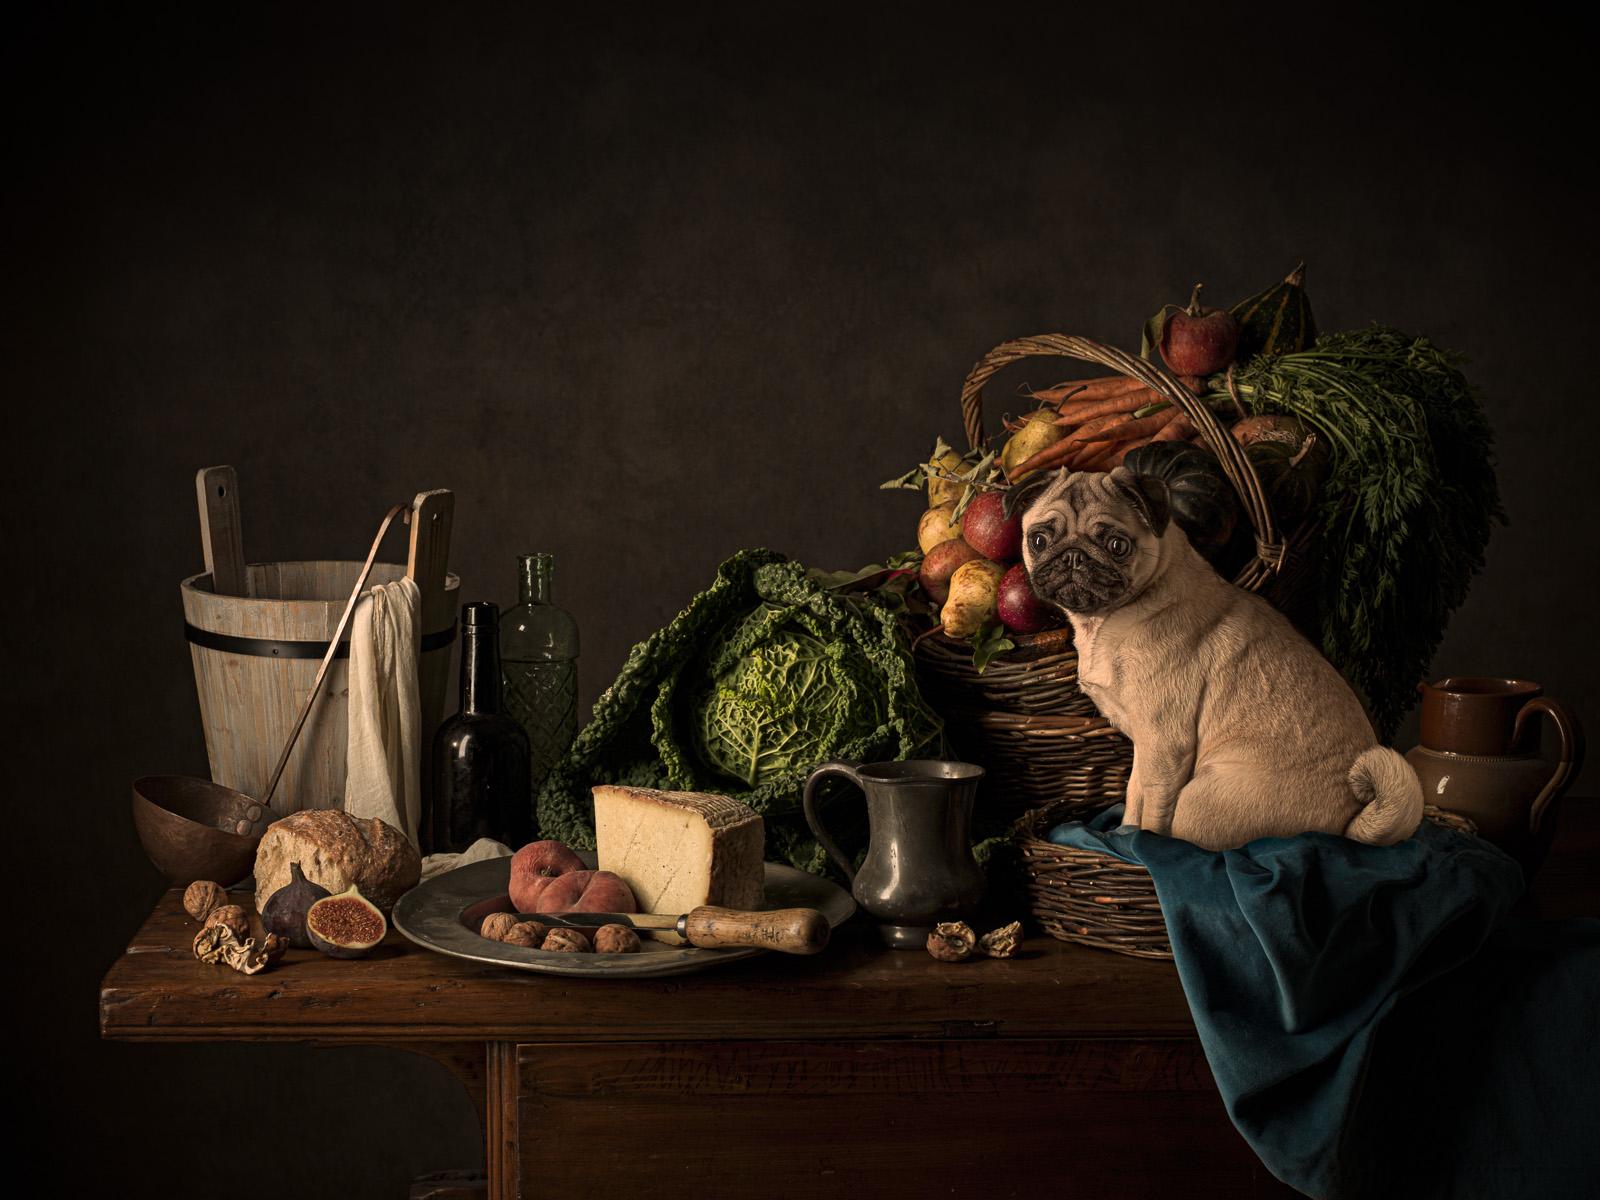 Tim Platt Color Photograph - Dutch dog #2 Pug - Animal signed limited edition print, Contemporary, Still life